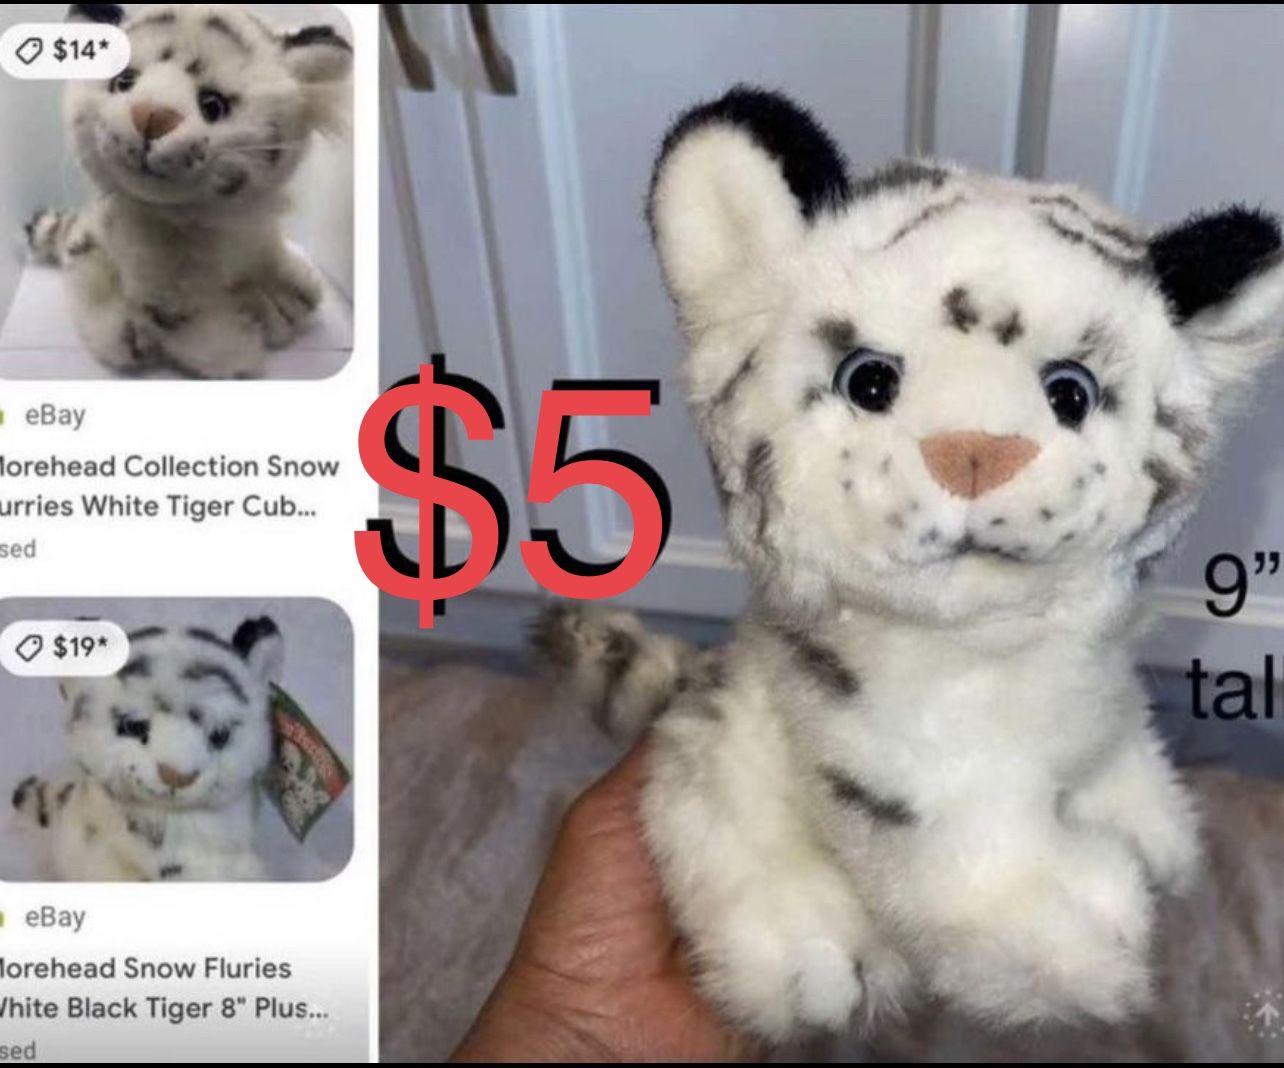 $5 Cute Snow Furries White Tiger Cub like new 9” tall like New